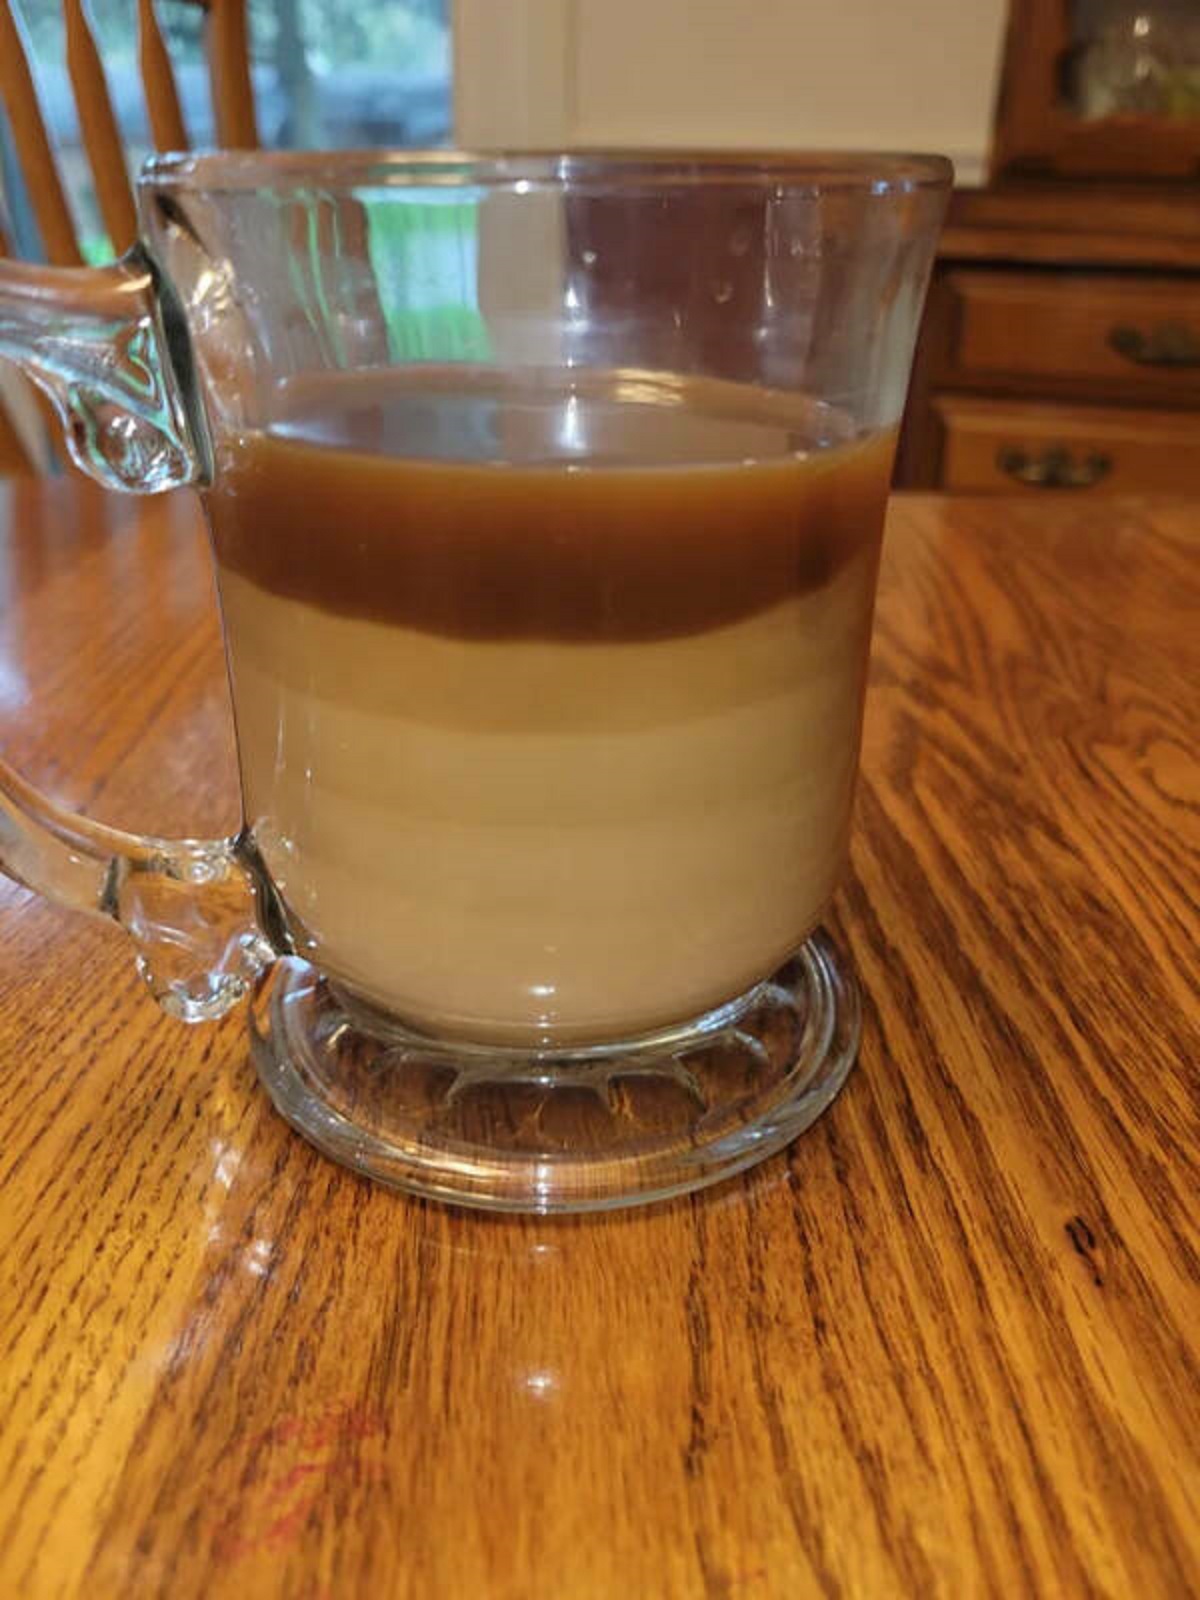 "The way my creamer layered itself in my coffee."